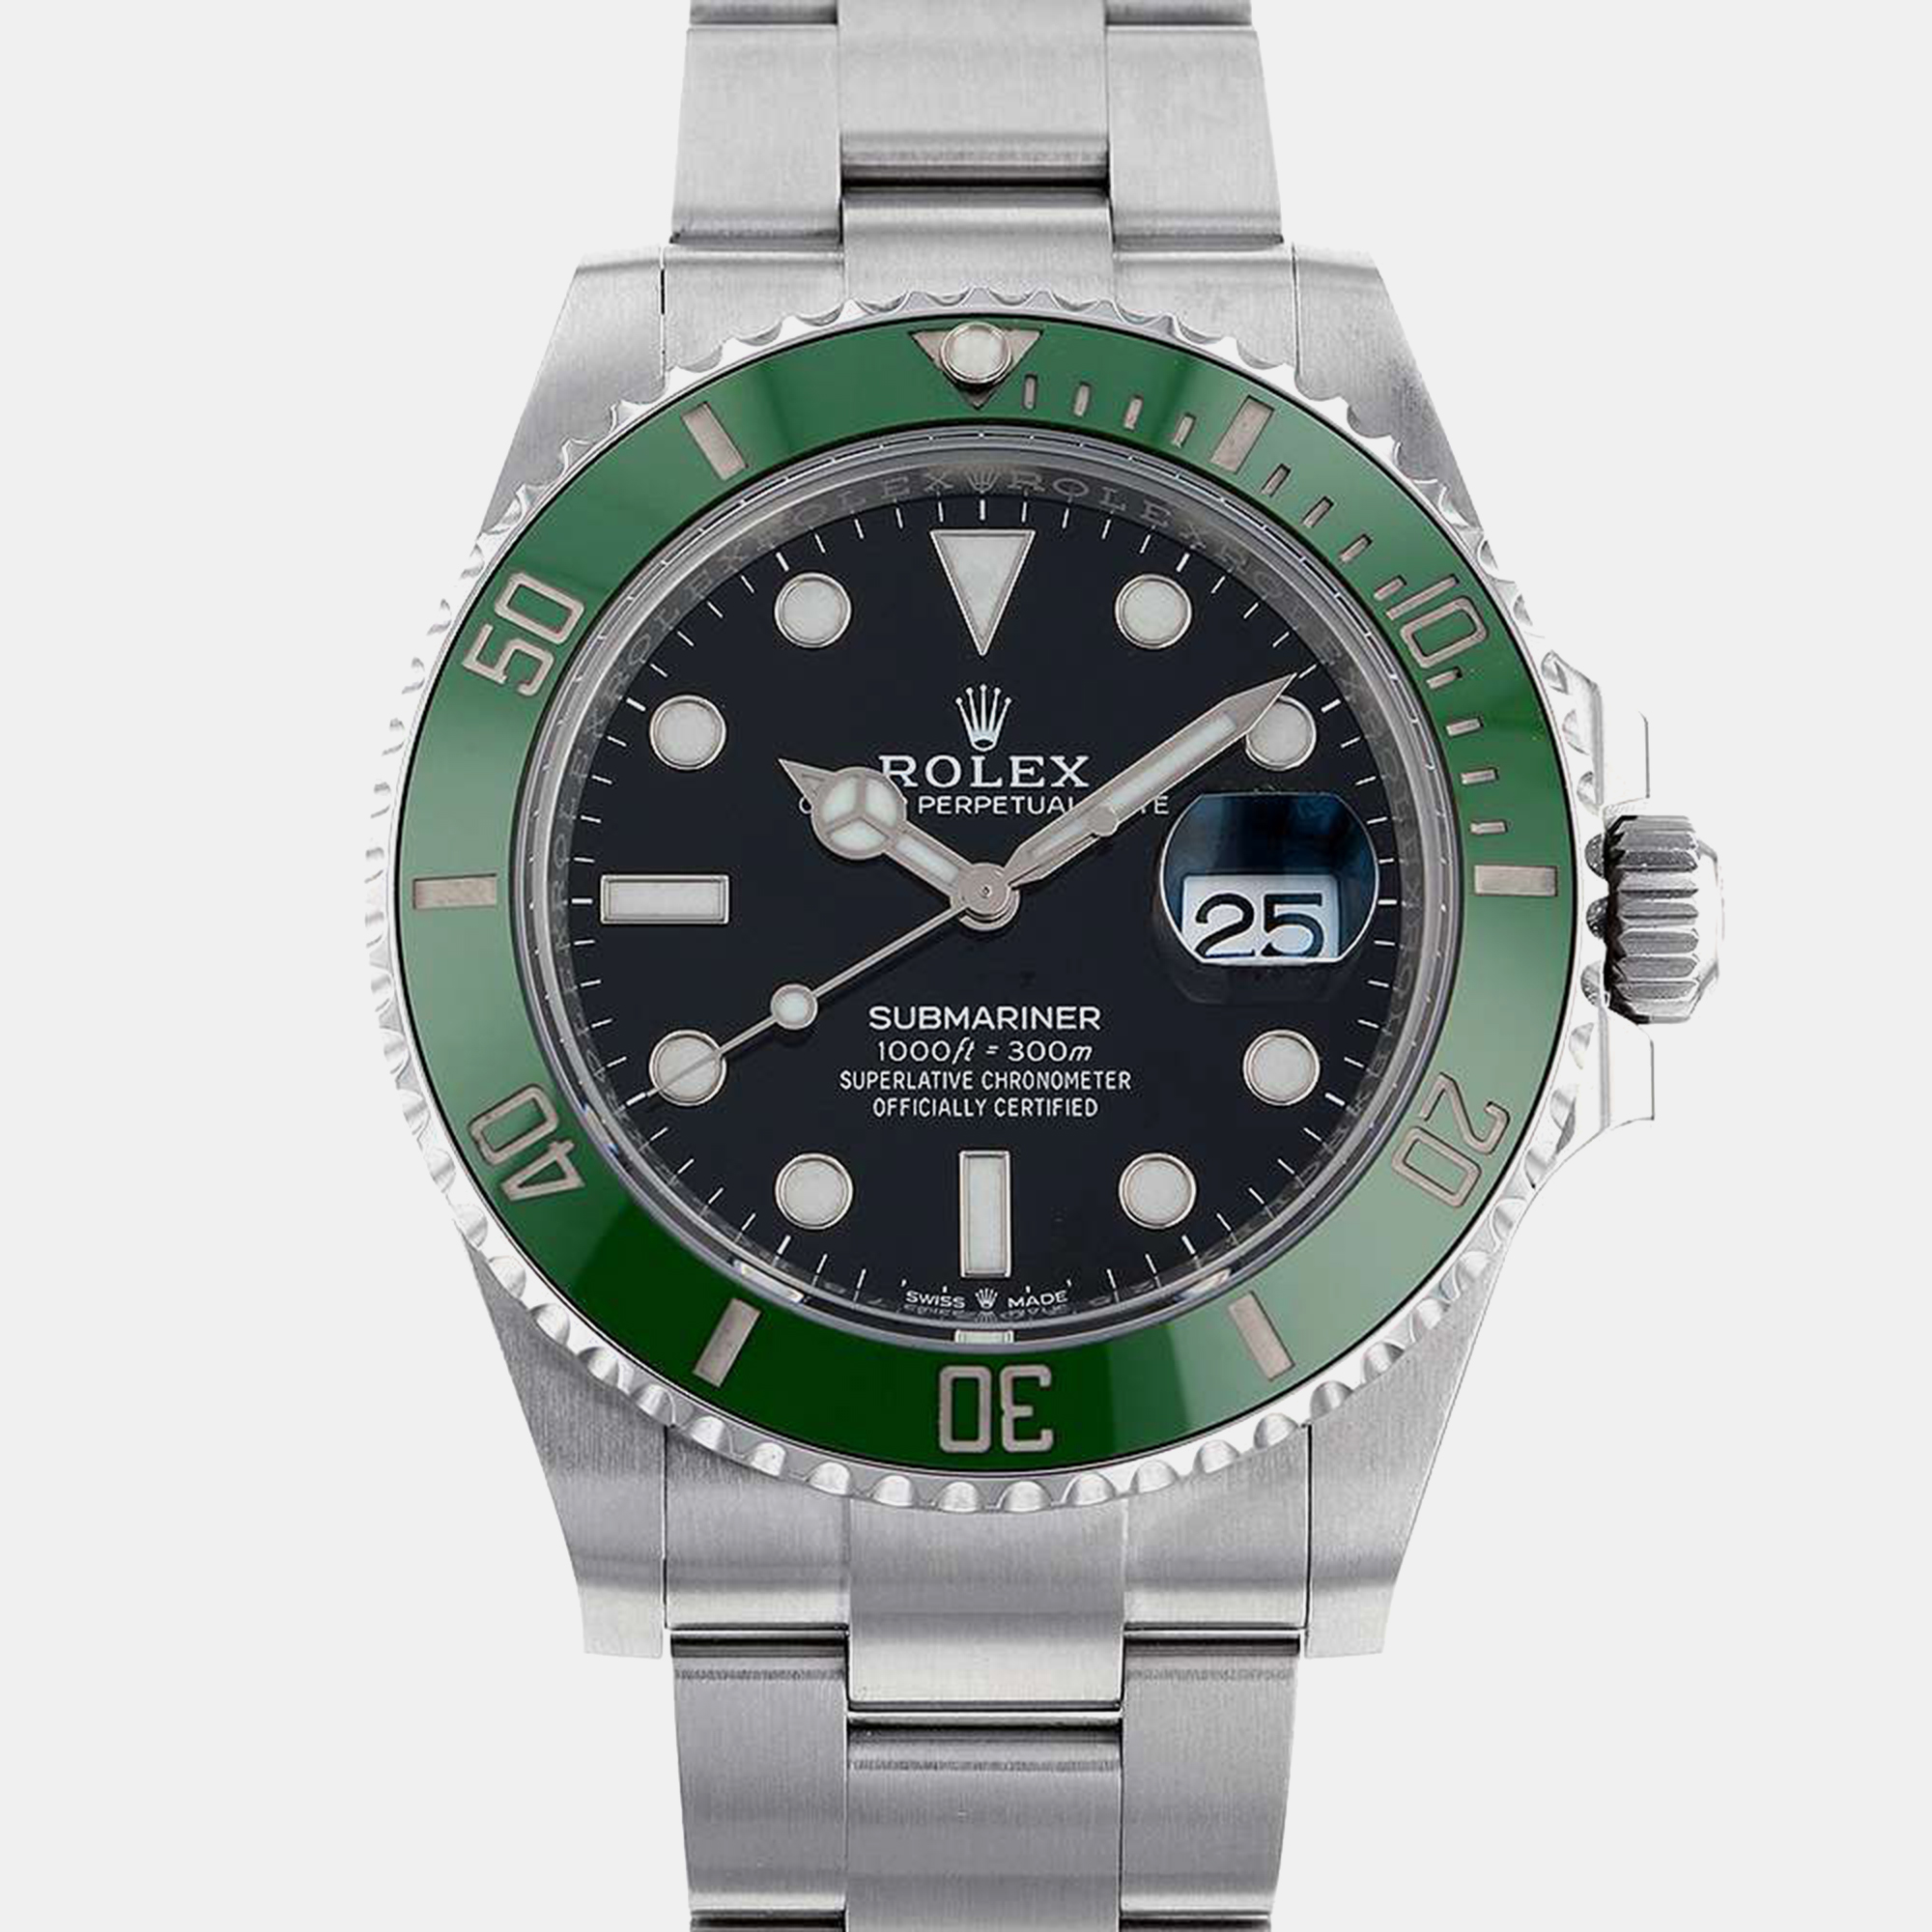 Rolex black stainless steel submariner 126610lv automatic men's wristwatch 41 mm